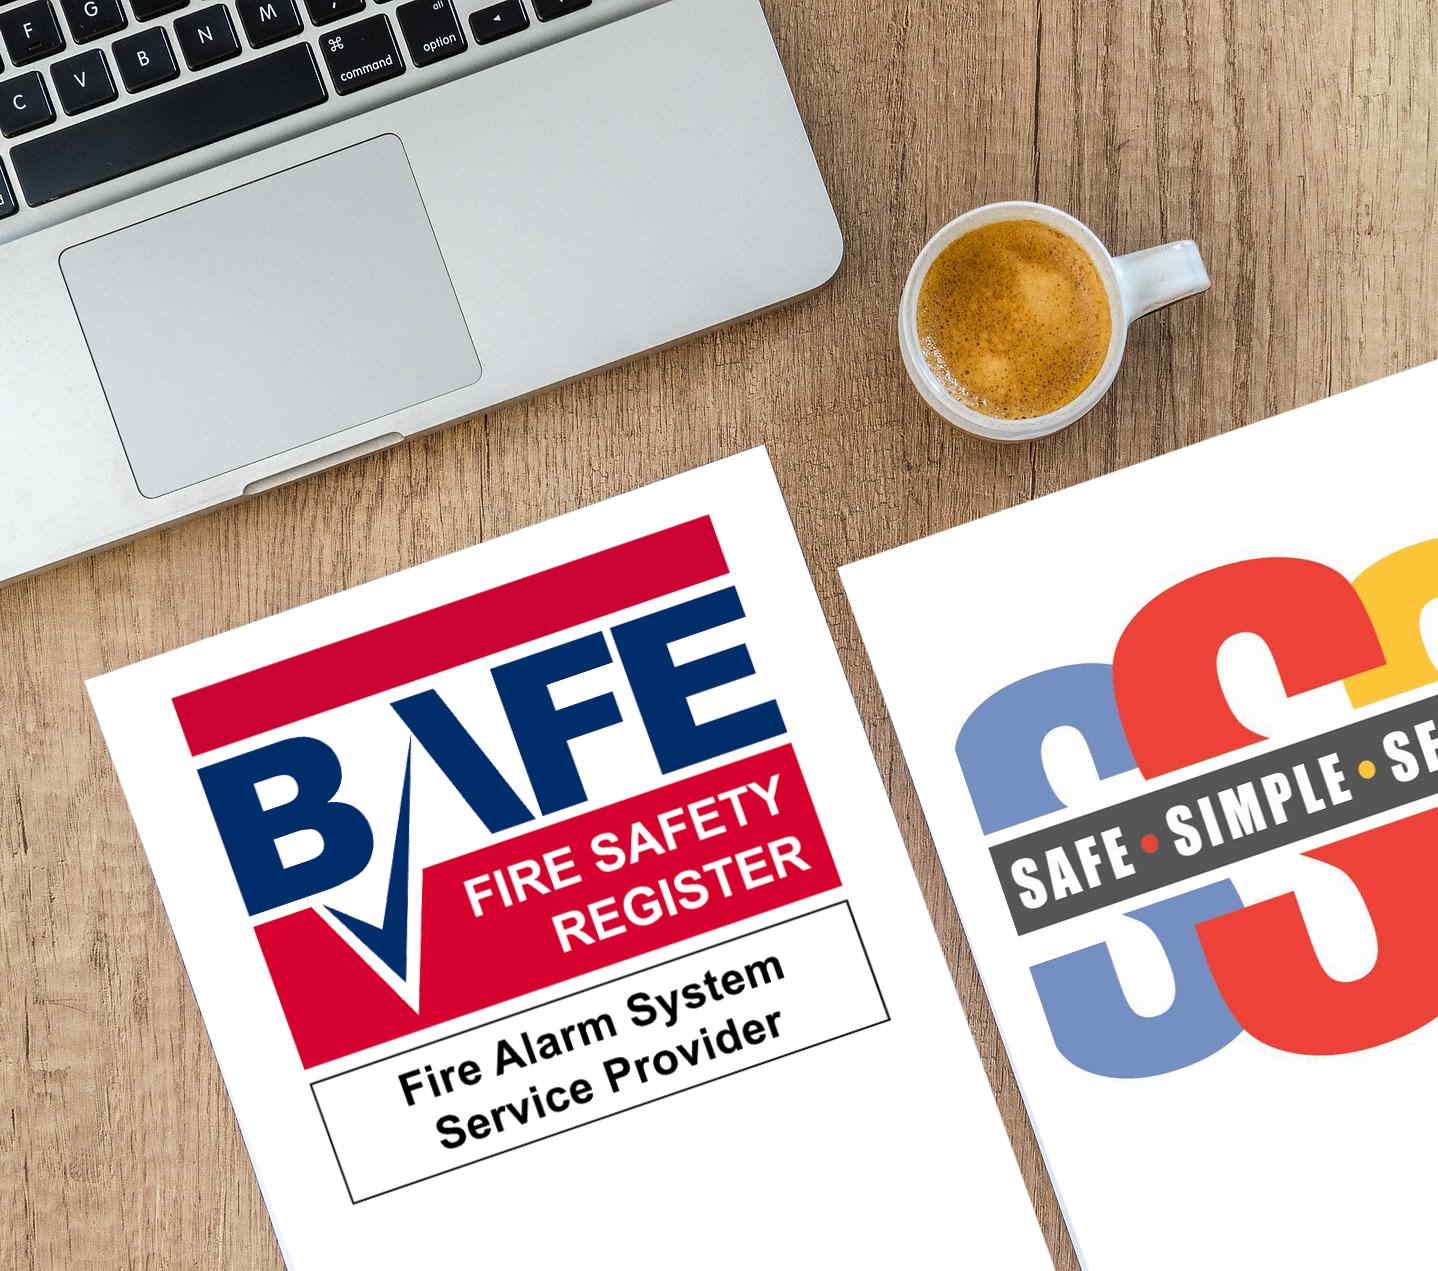 BAFE Certificate Safe Simple Secure.jpg